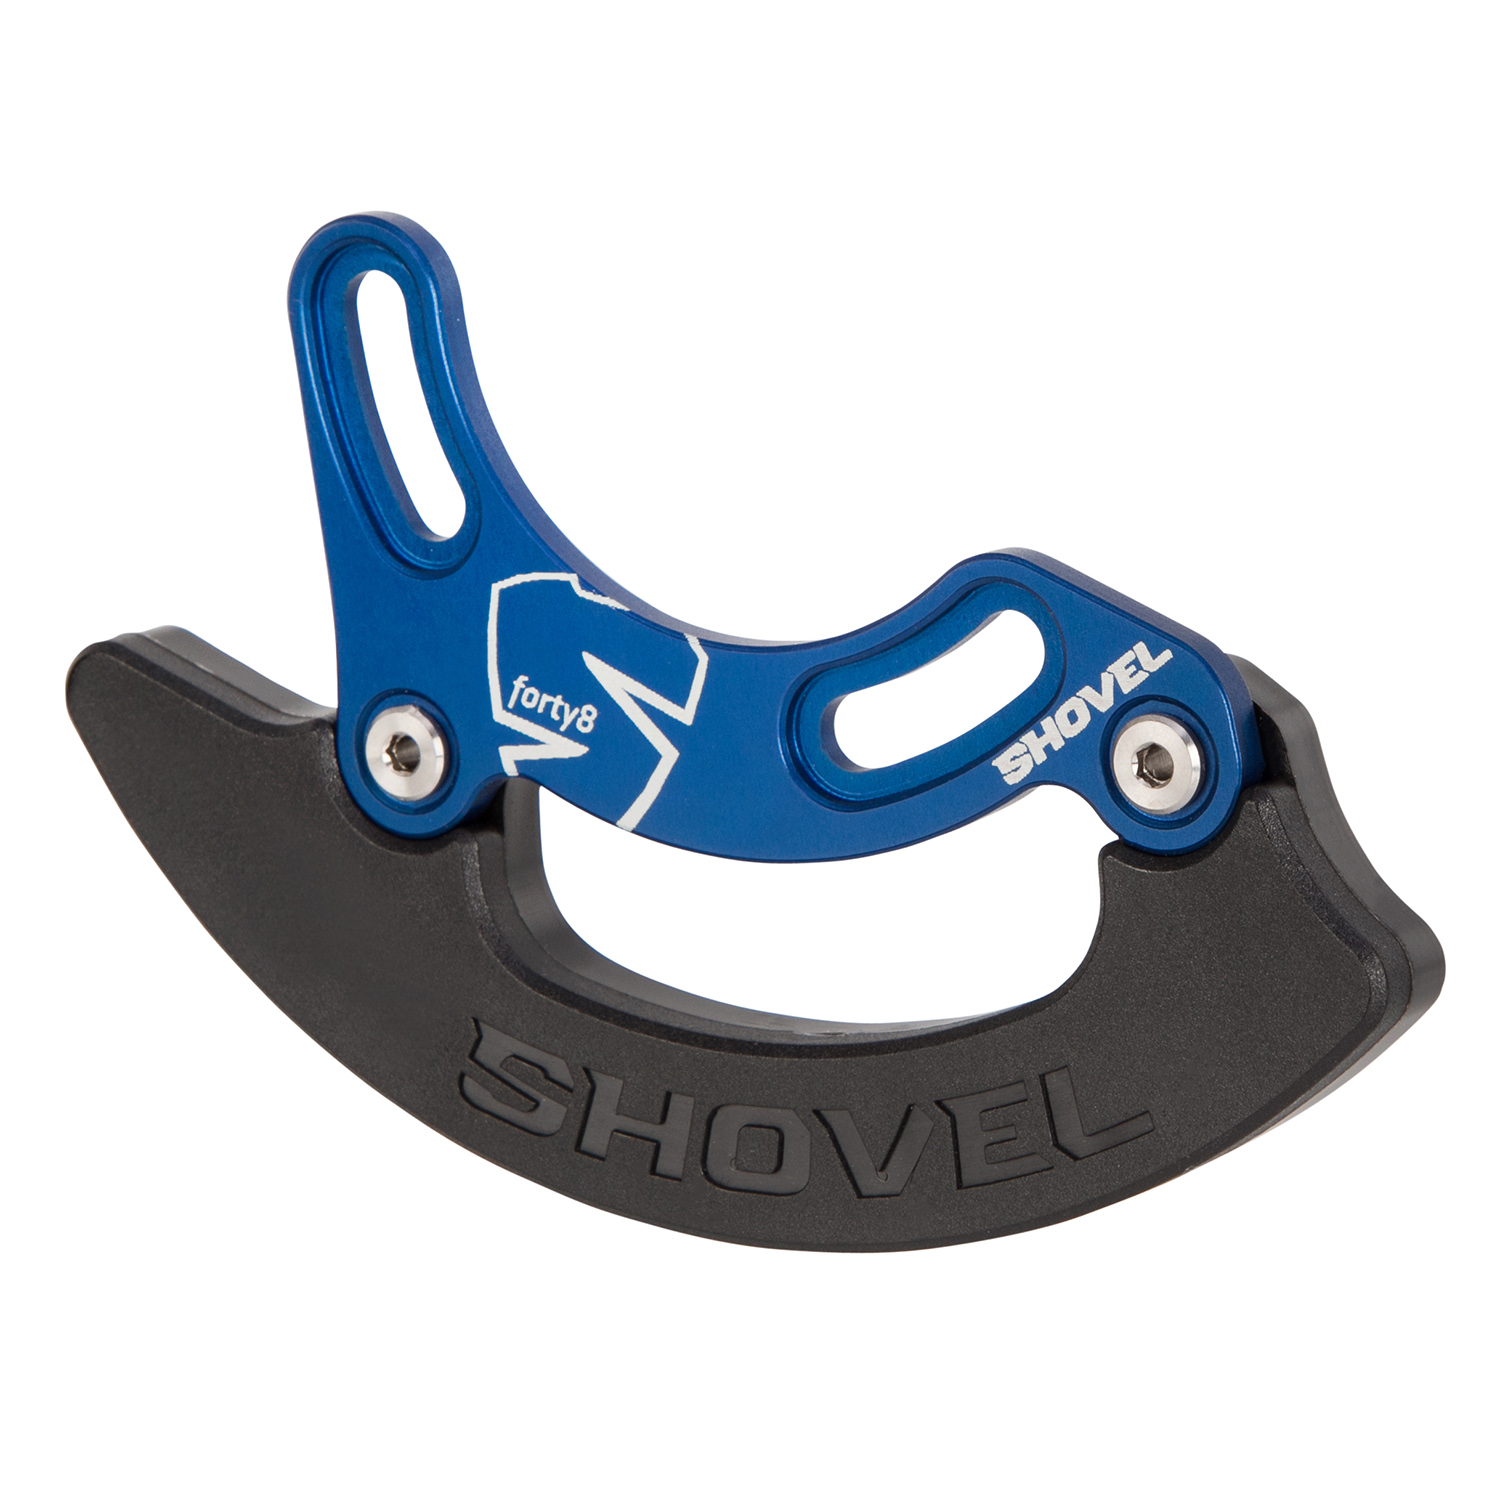 Shovel Guide Chaîne Forty8 Blue, 26-34 Teeth, ISCG05